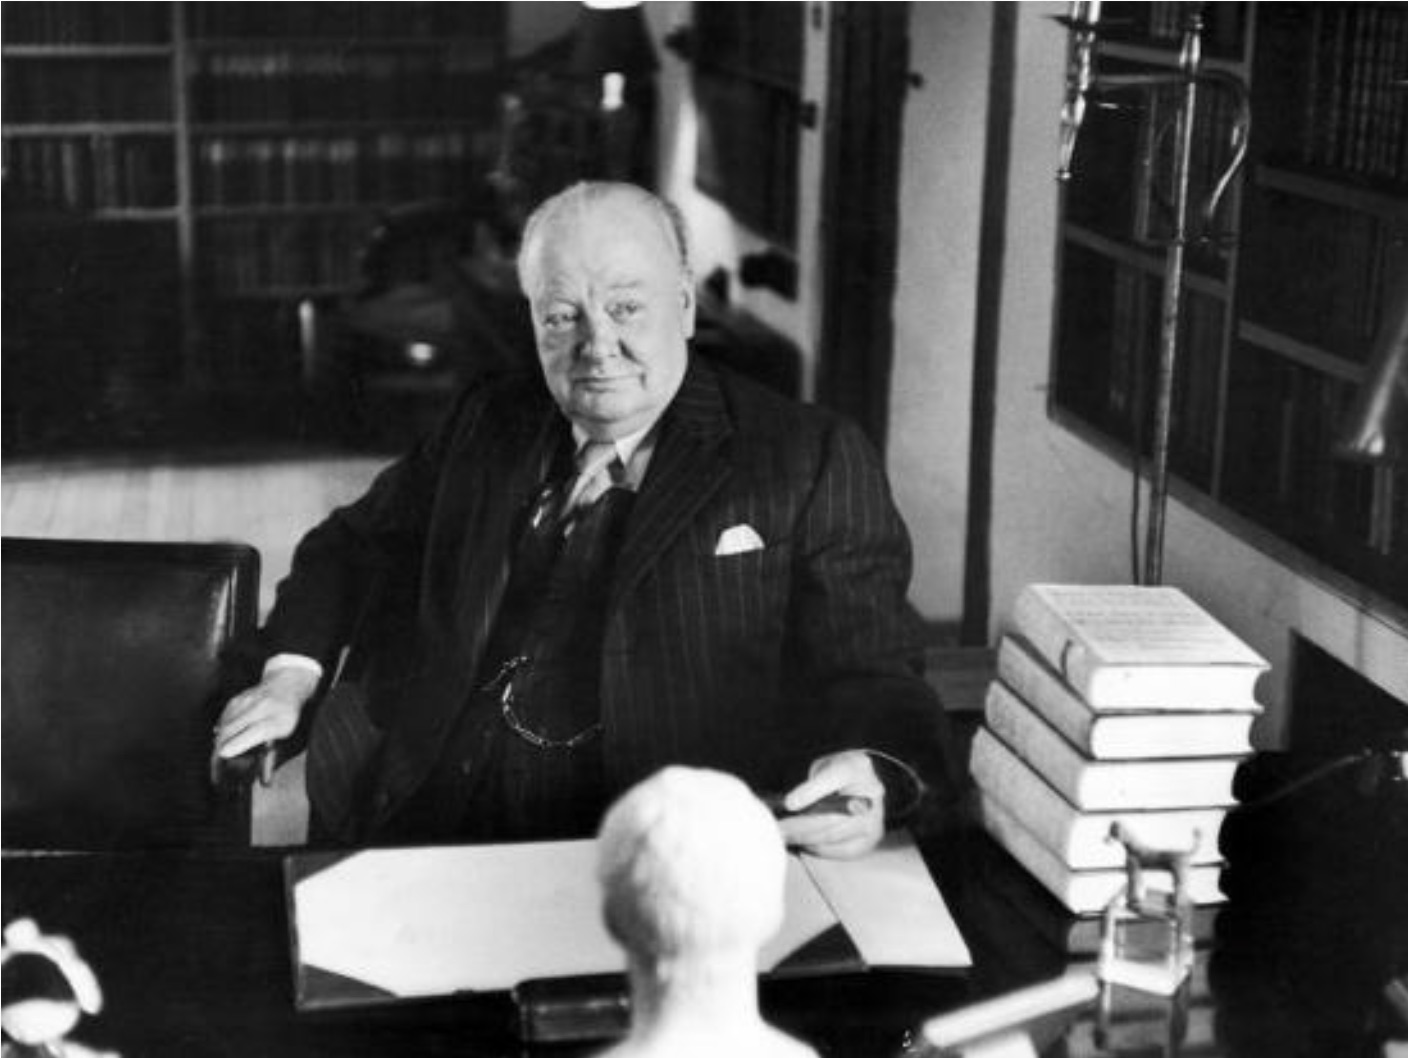 Winston Churchill "Chartwell" Photo Print